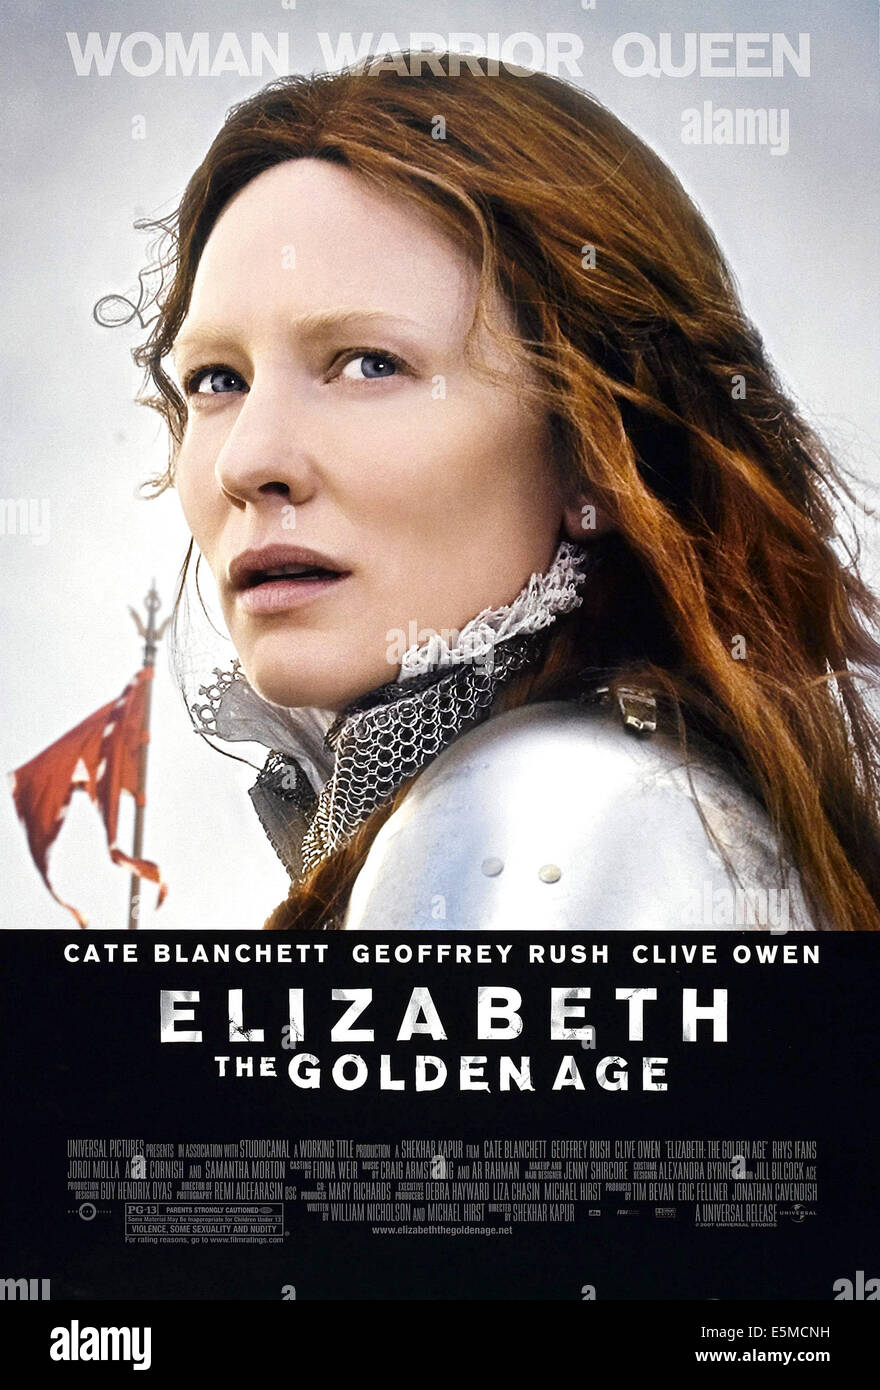 ELIZABETH THE GOLDEN AGE Cate Blanchett, 2007. ©Universal Pictures/cortesia Everett Collection Foto Stock